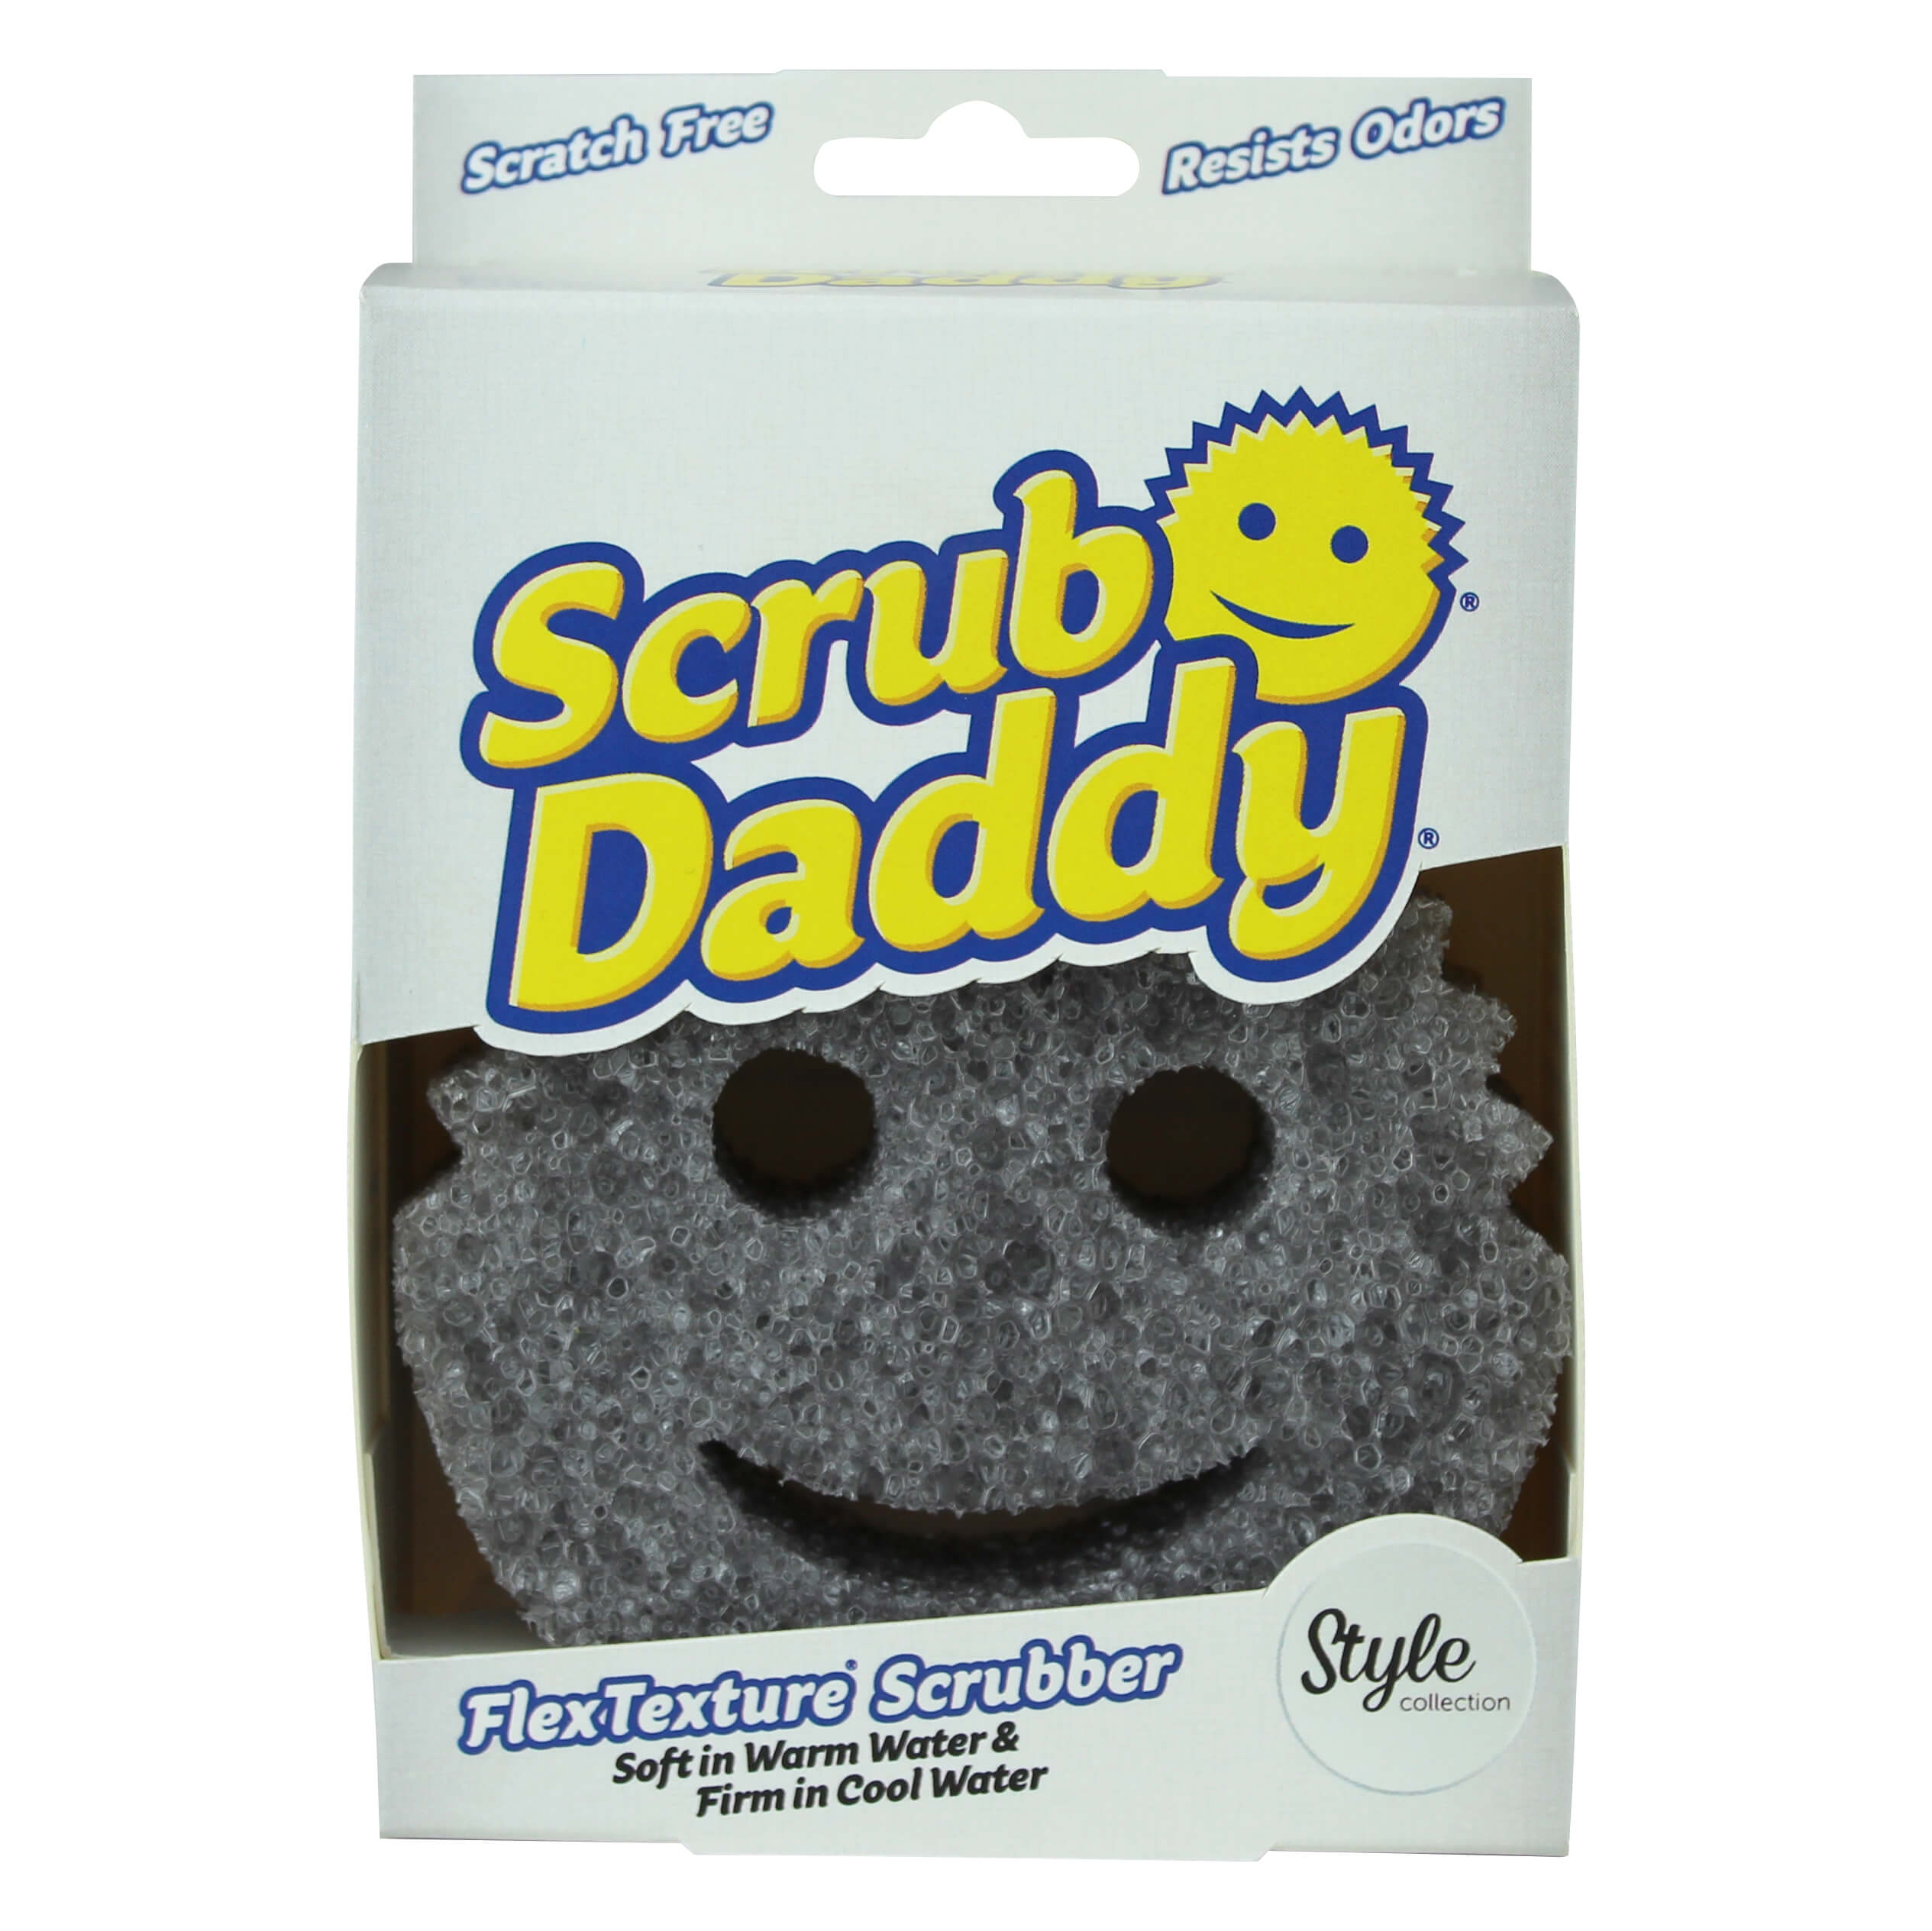 https://scrubdaddy.co.uk/wp-content/uploads/2021/06/Scrub-Daddy-1ct.jpg